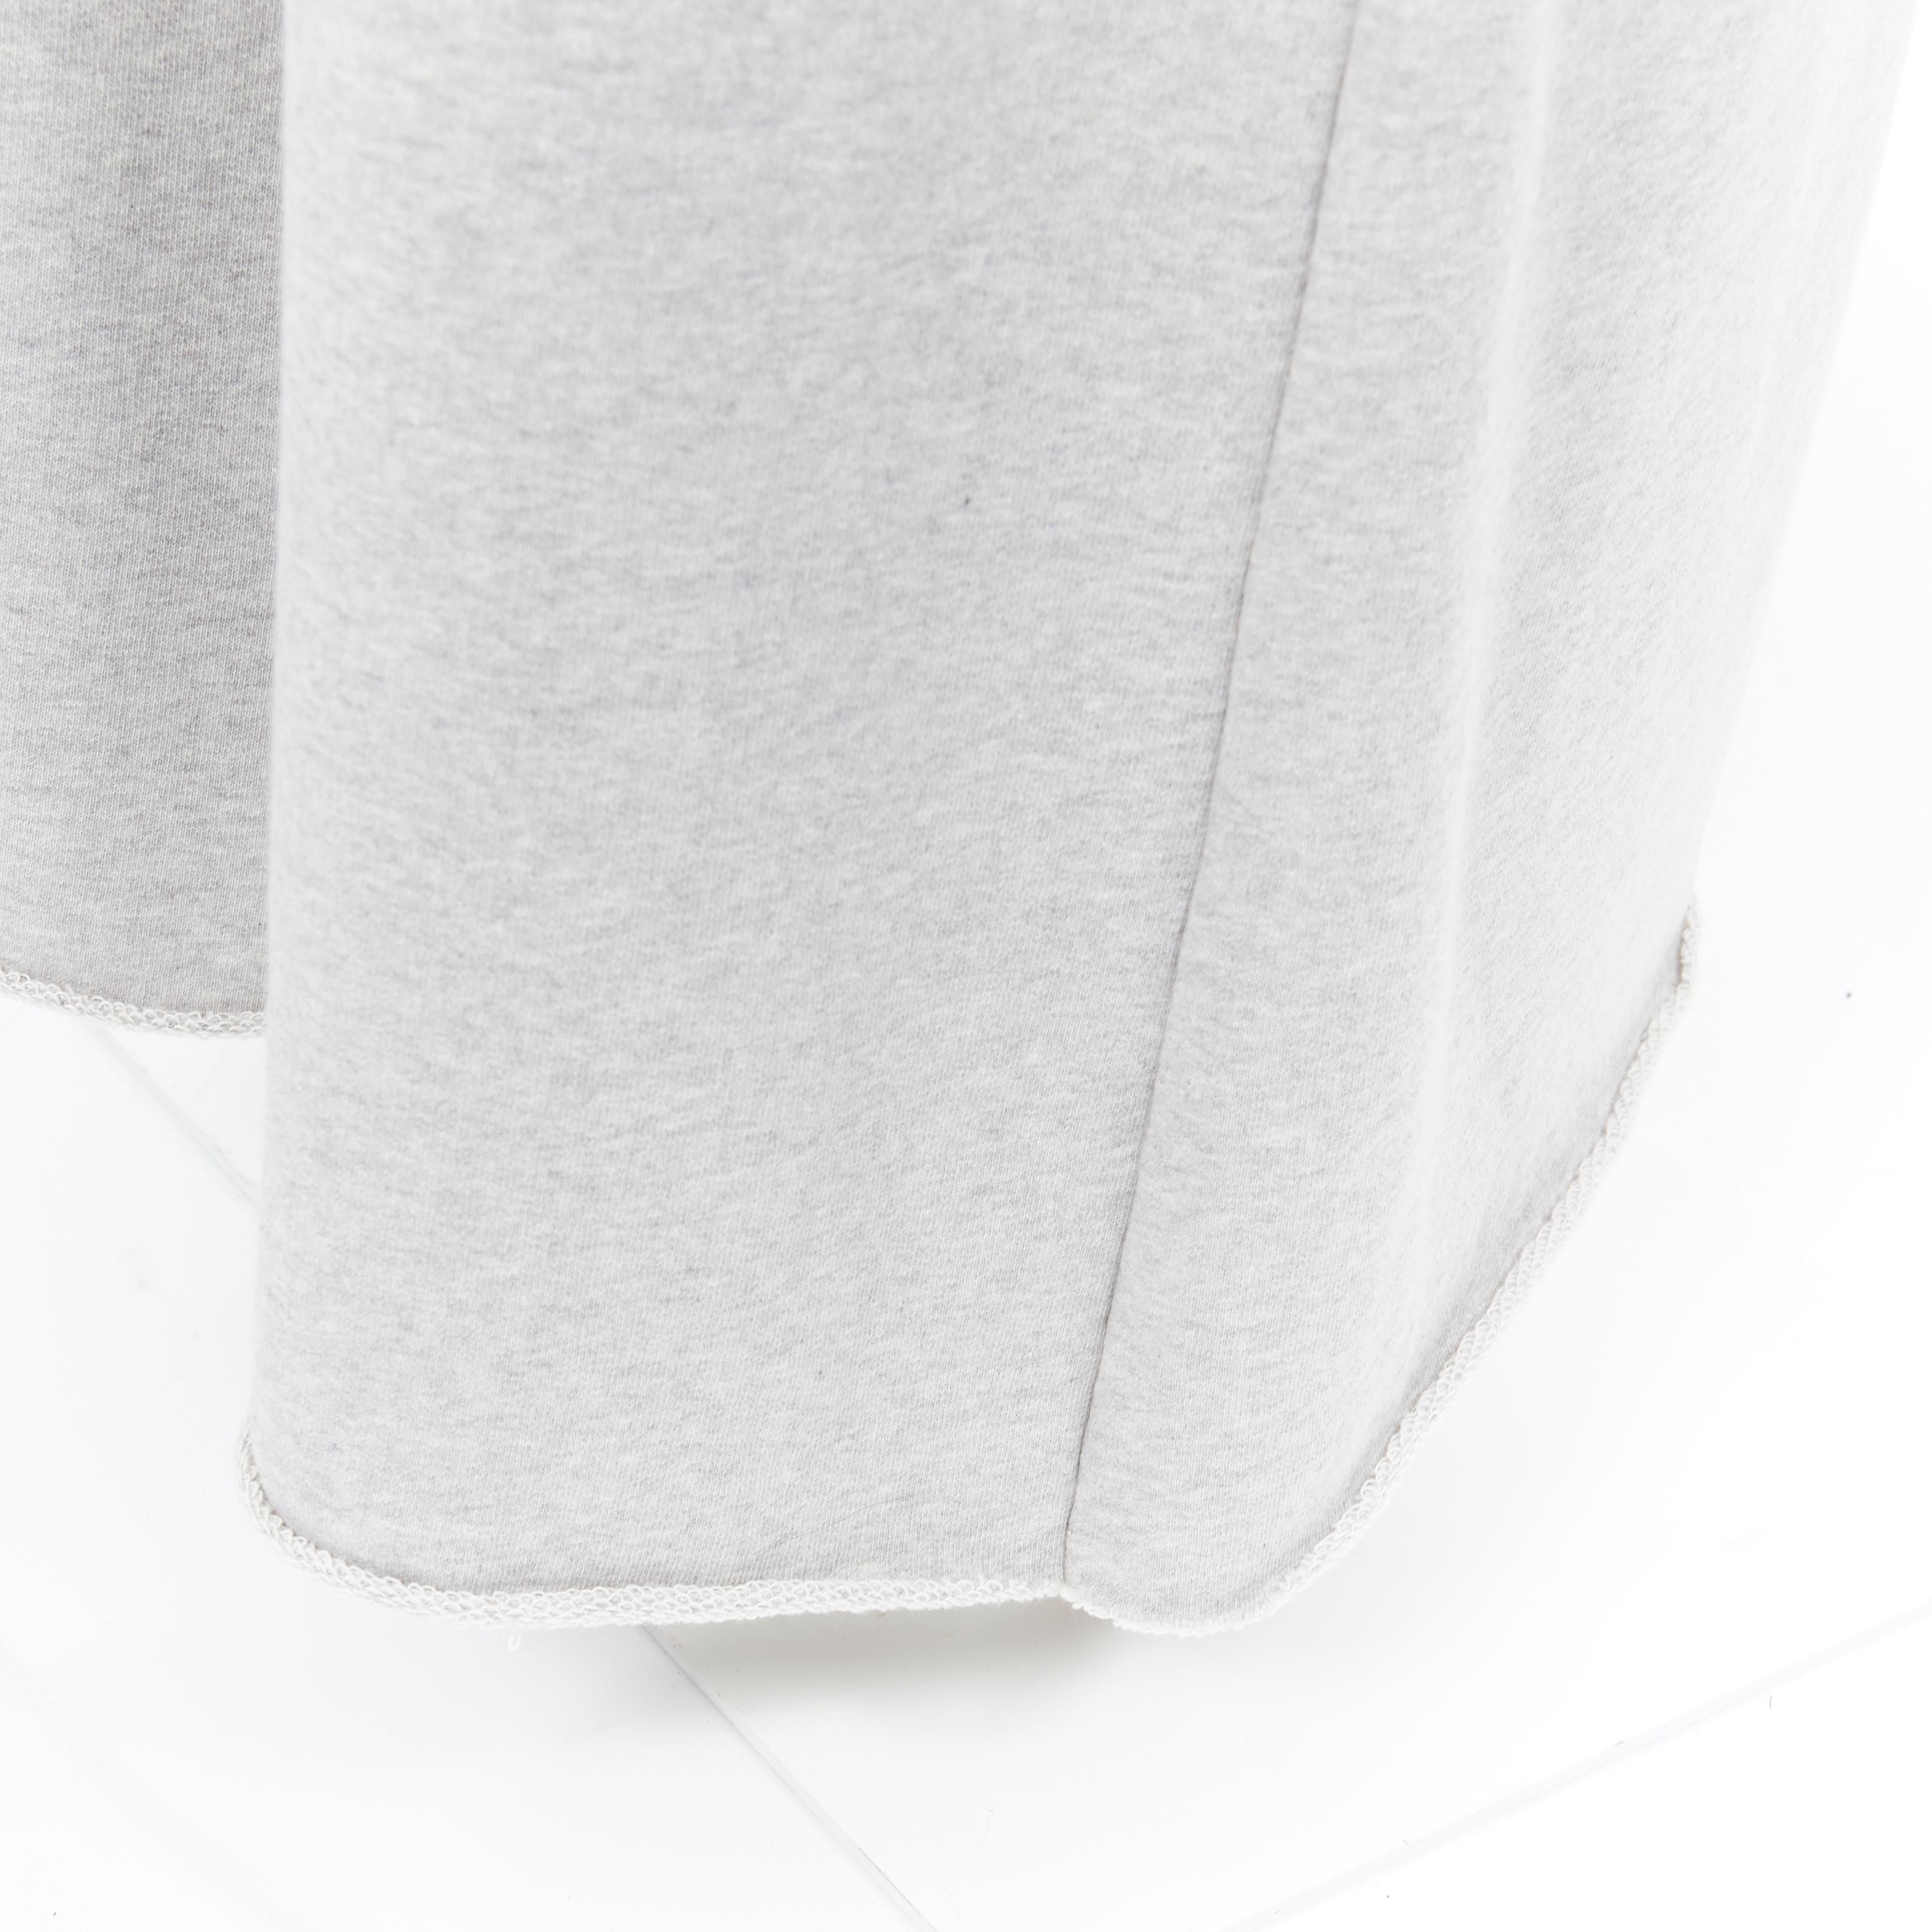 new VETEMENTS AW18 grey cotton oversized extreme wide leg sweatpants jumpsuit XS 2